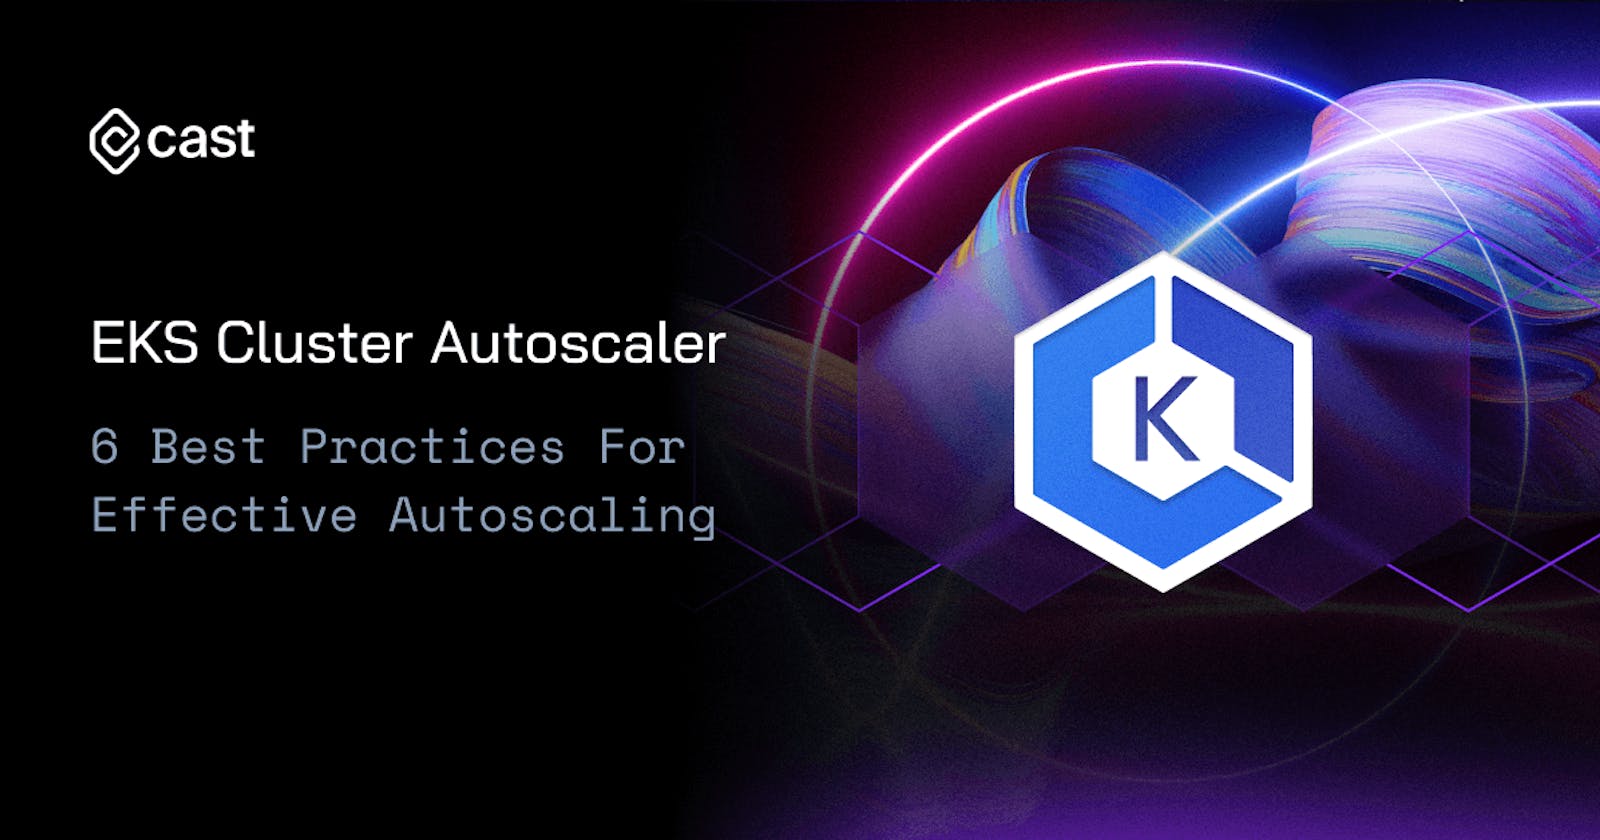 EKS Cluster Autoscaler: 6 Best Practices For Effective Autoscaling